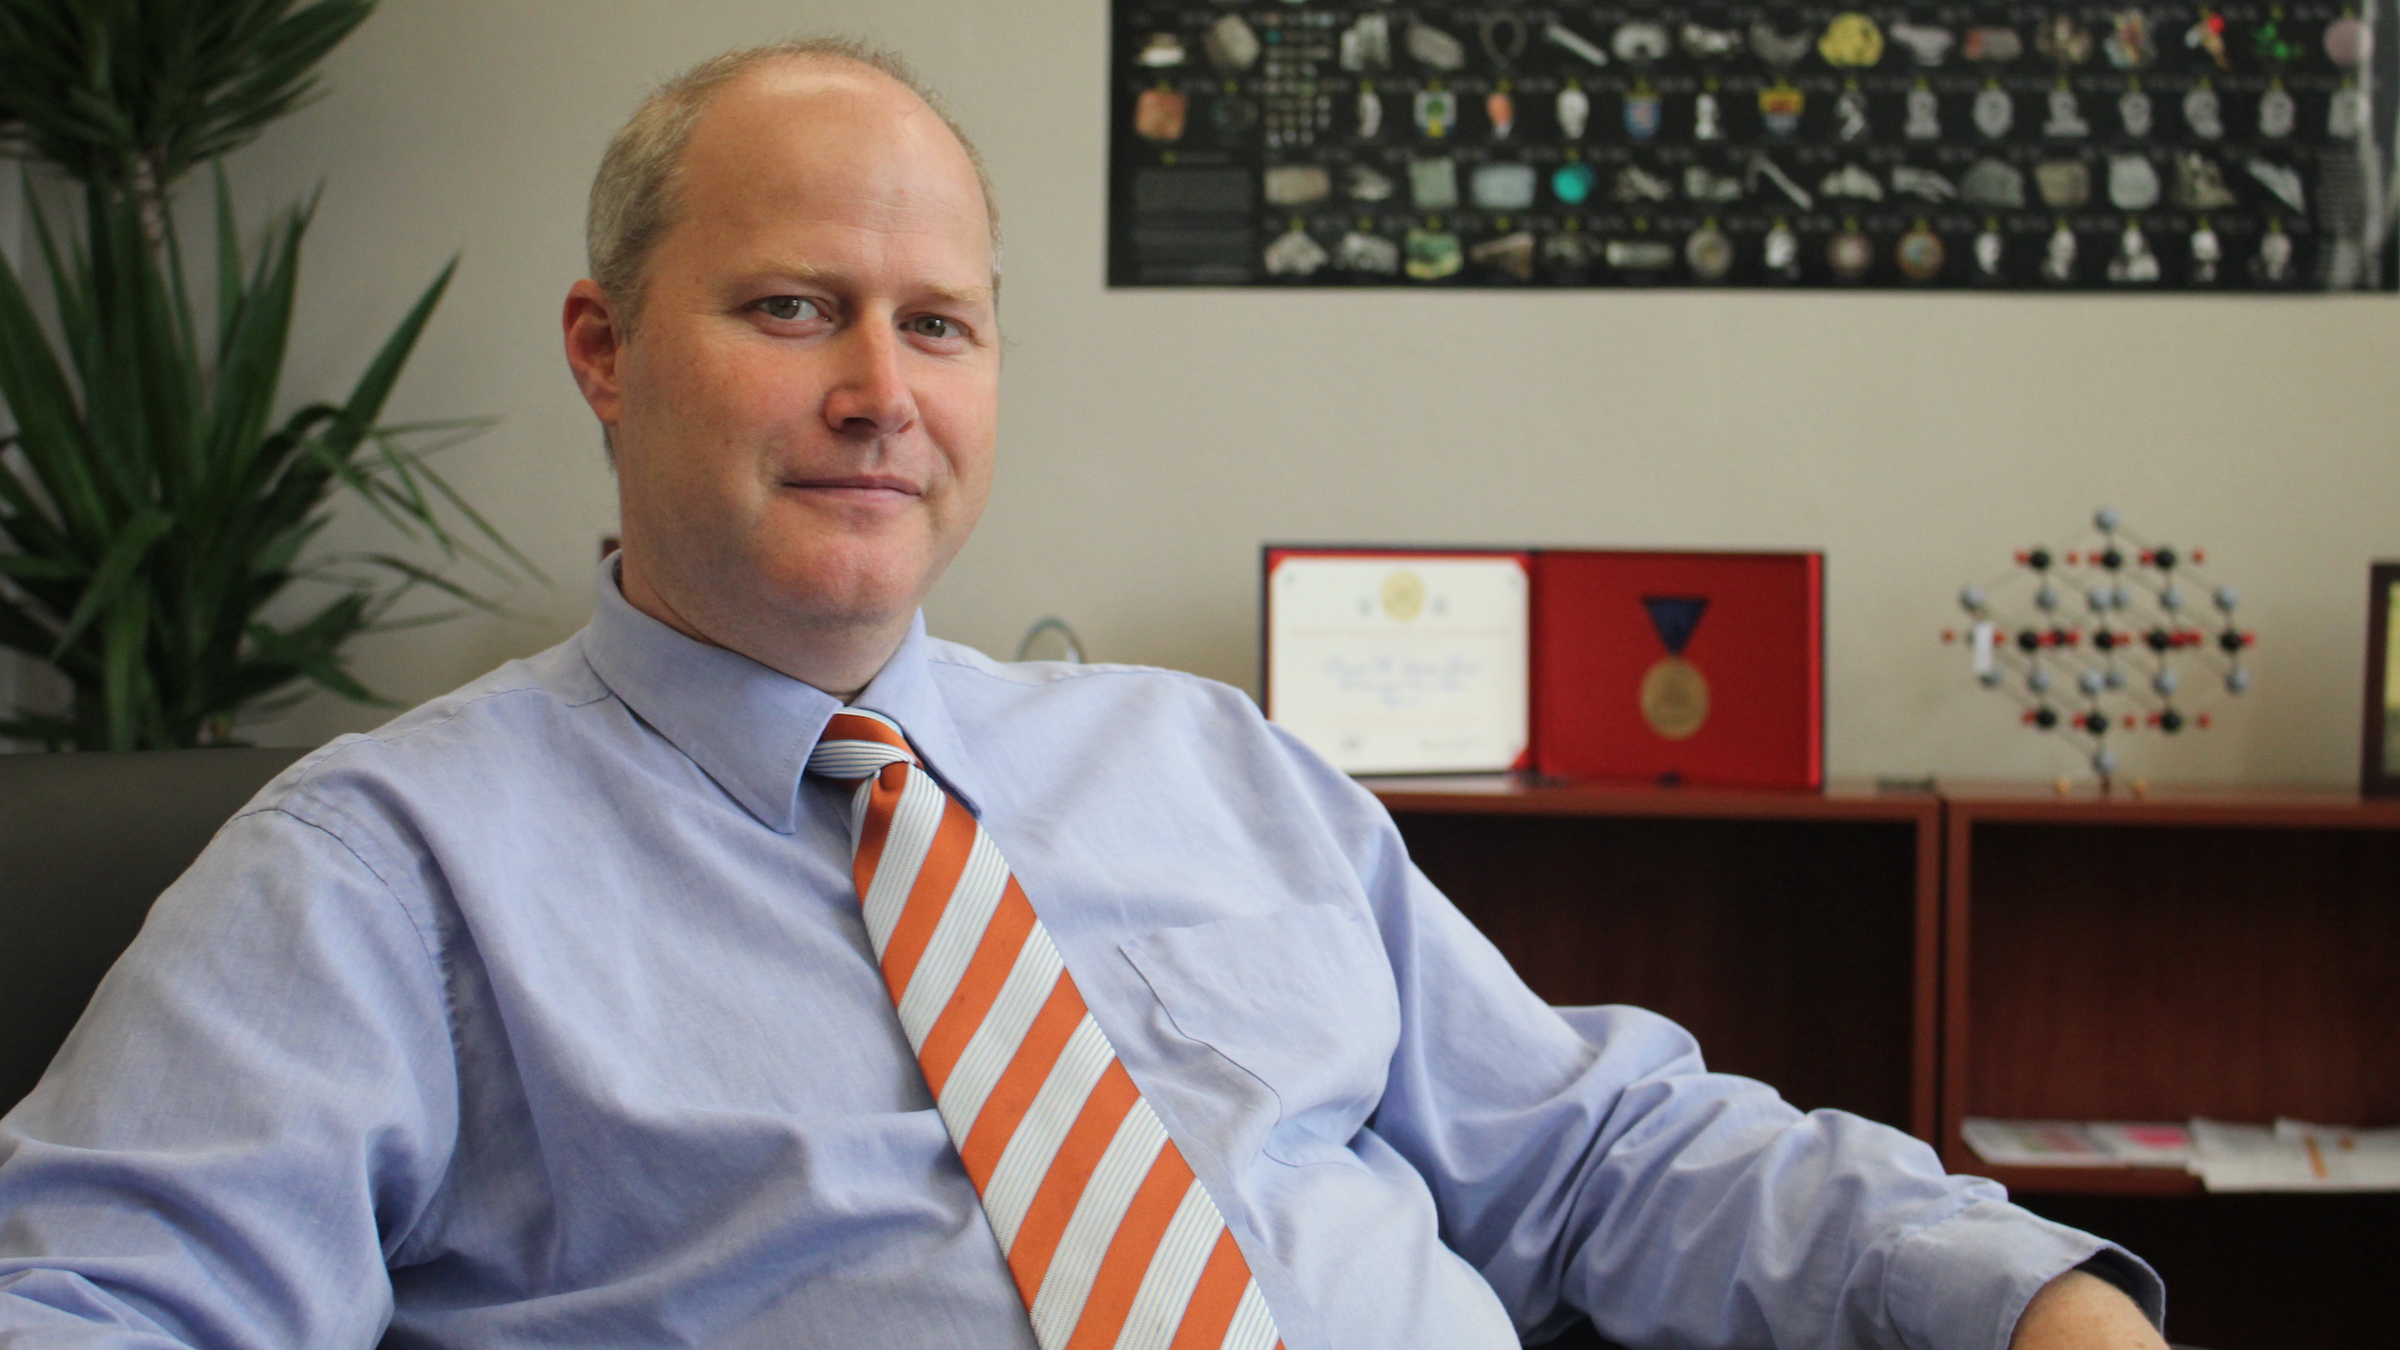 David Vanden Bout in tie in office in front of chemistry displays